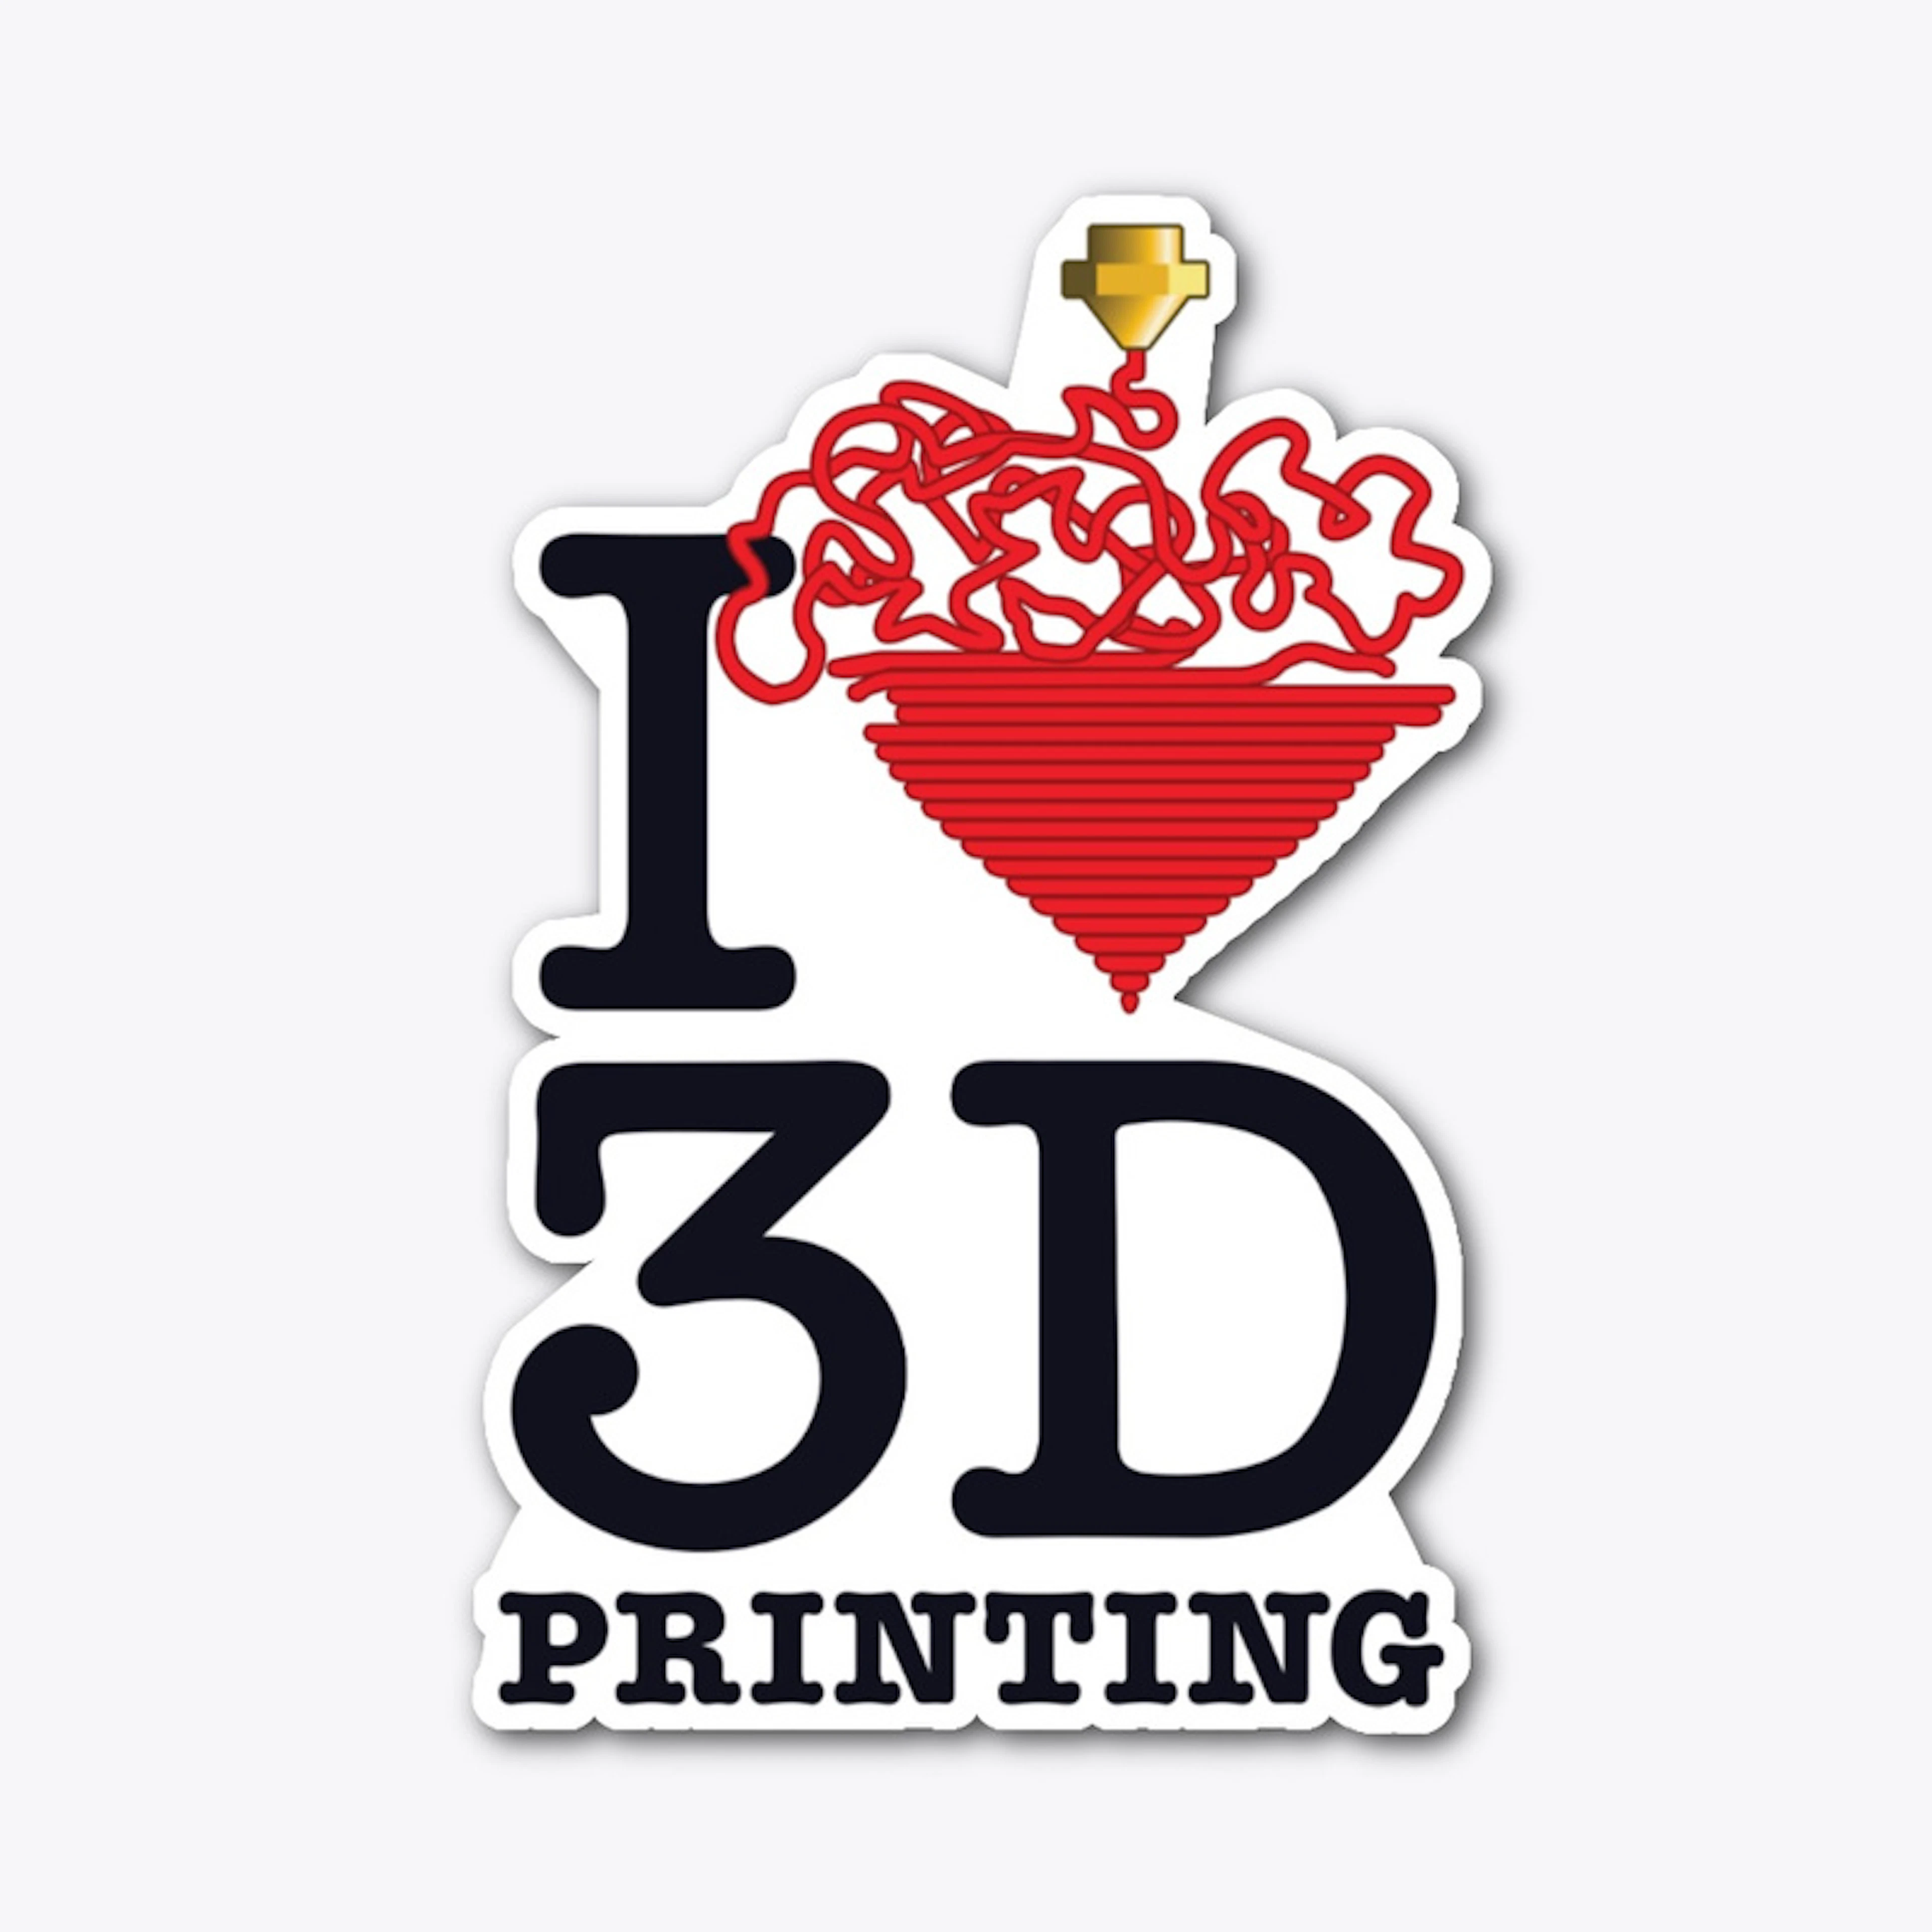 I ❤️ 3D PRINTING